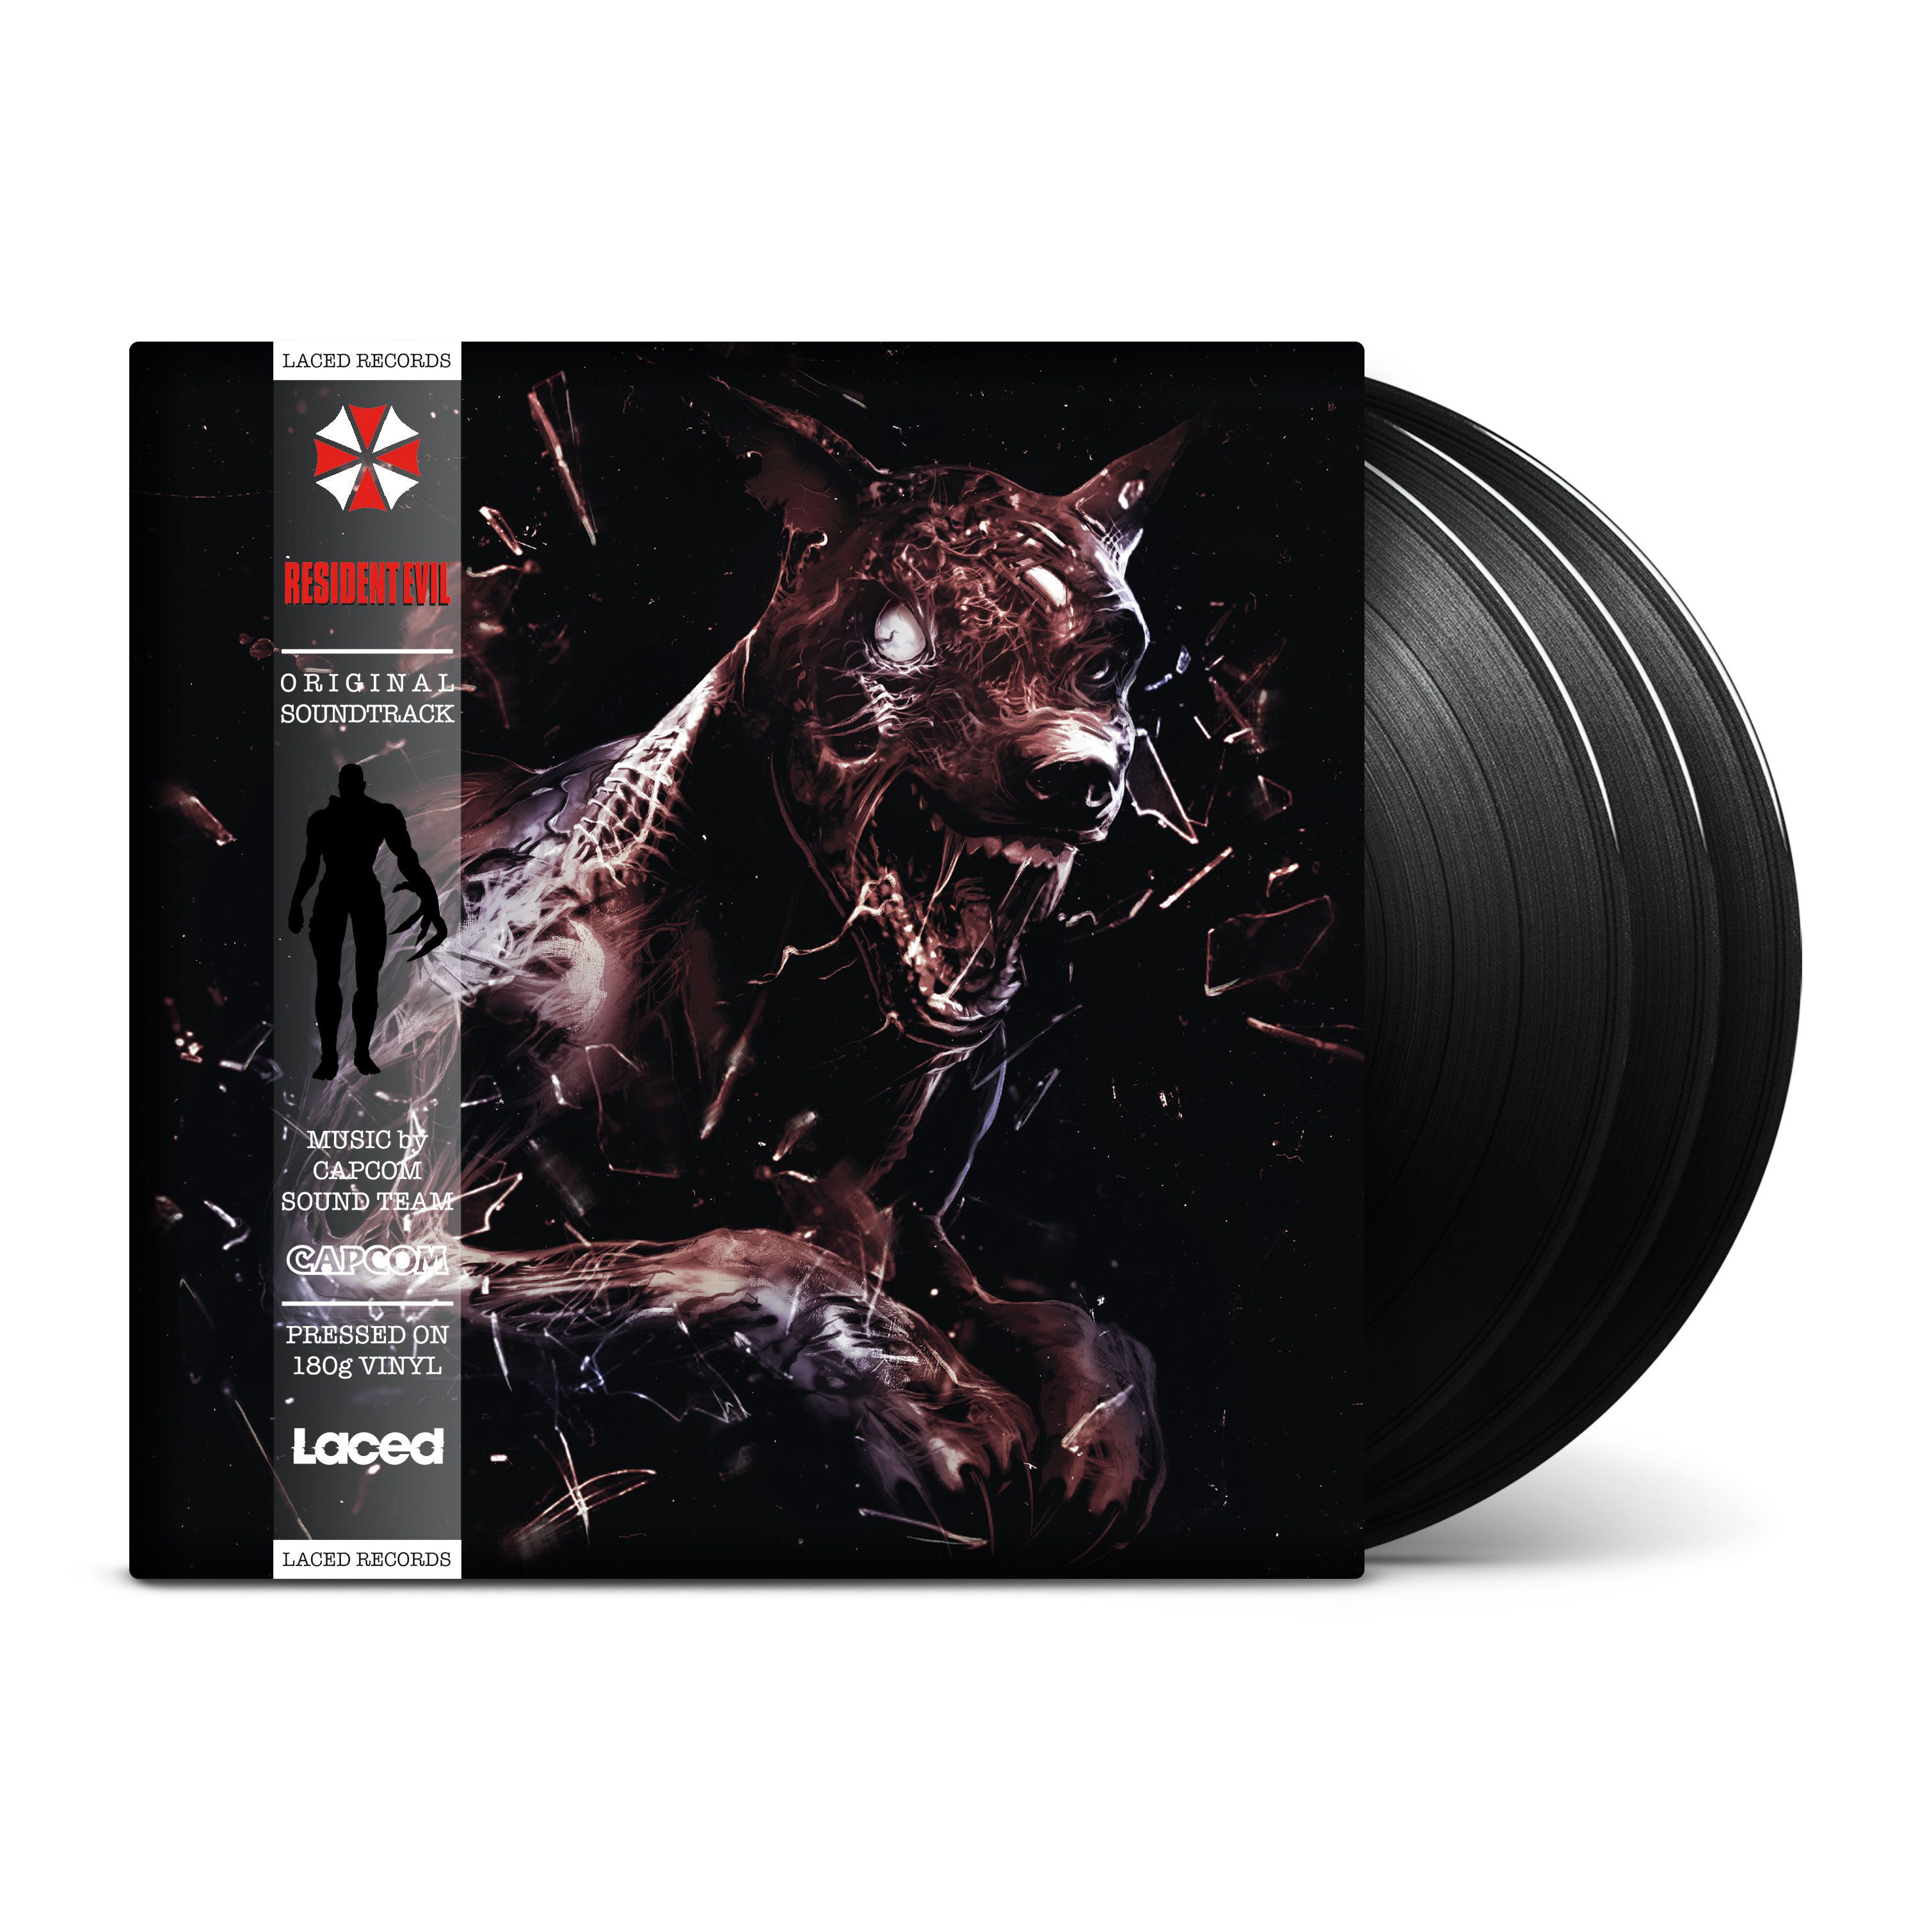 Resident Evil (1996 Original Soundtrack + Original Soundtrack Remix) - 3-LP Black Vinyl